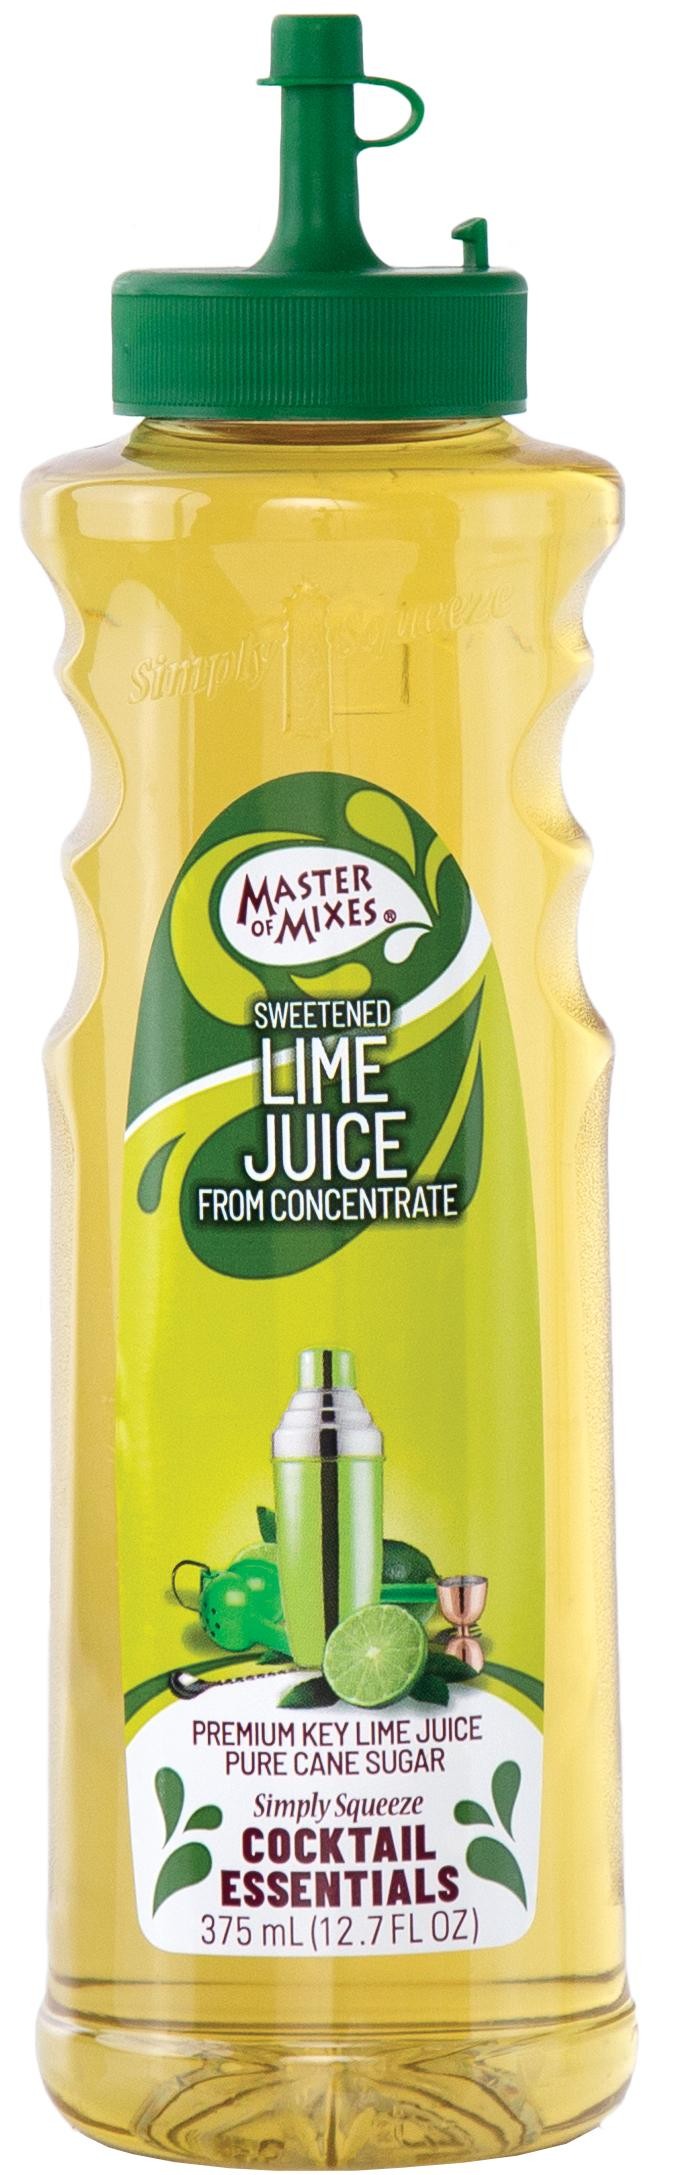 Master of Mixes Cocktail Essentials Lime Juice  12.7 Fl Oz